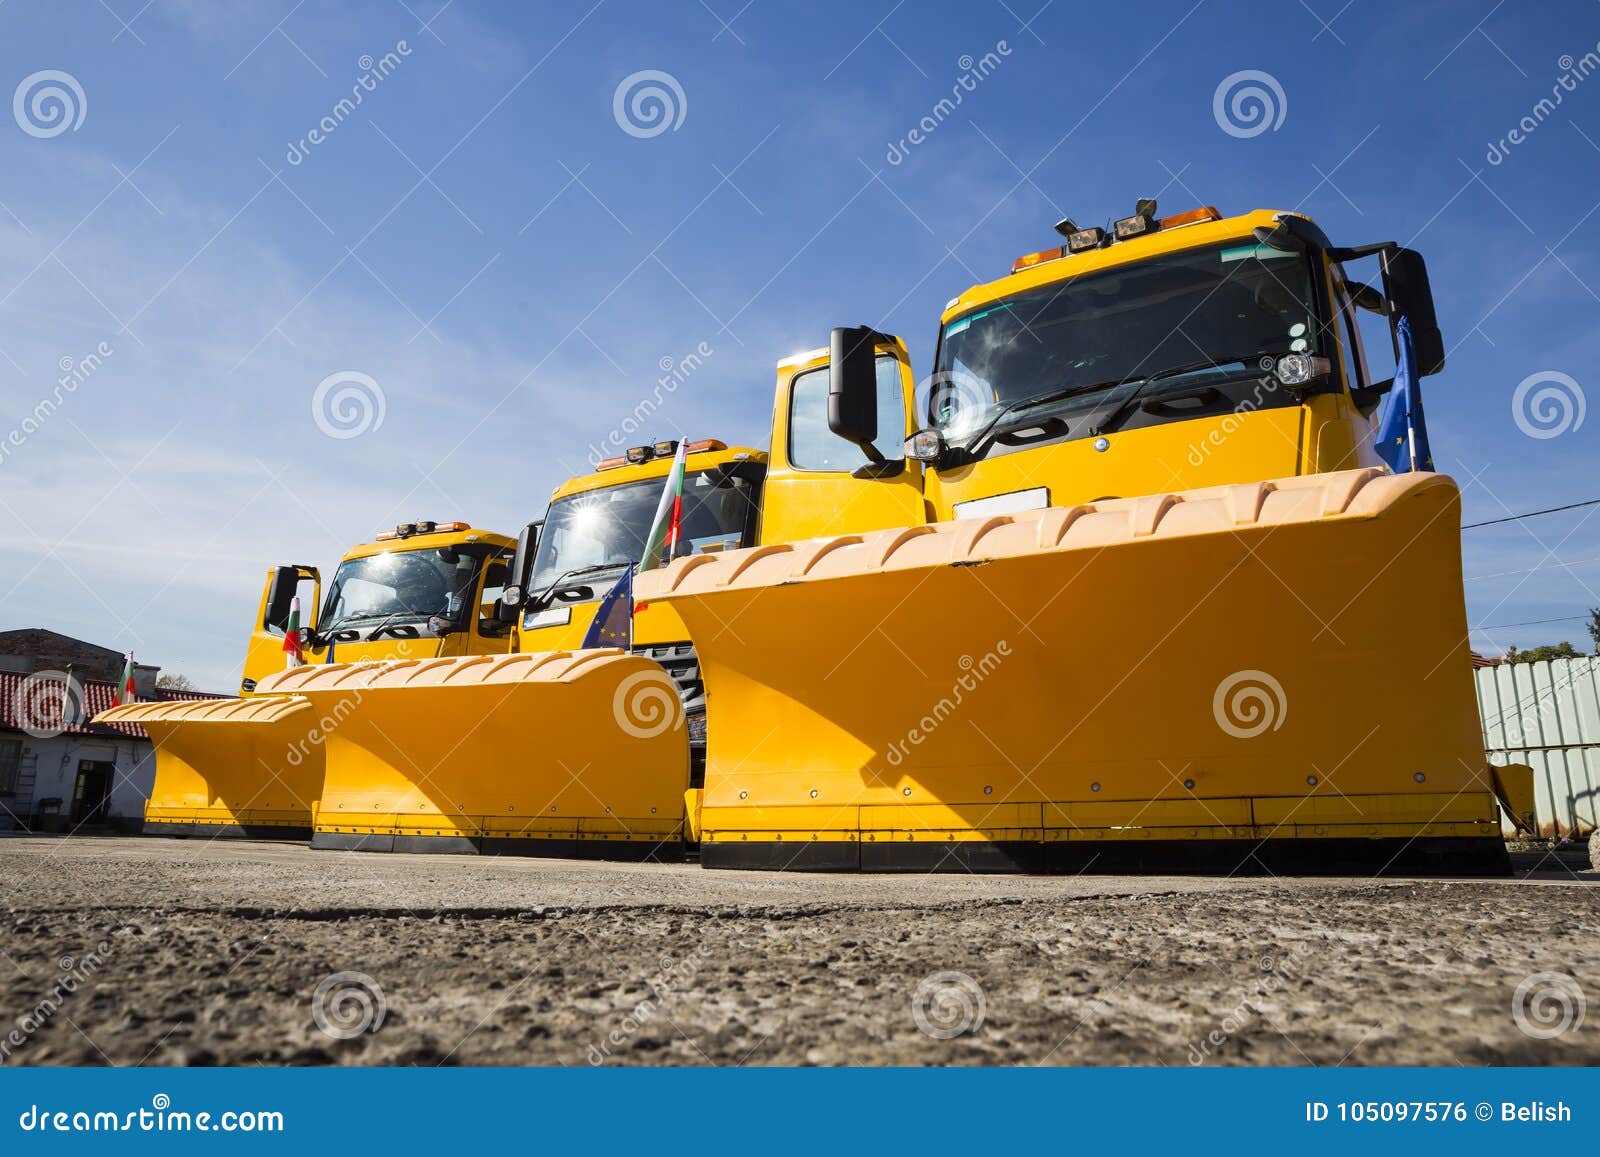 yellow snowplow trucks in line